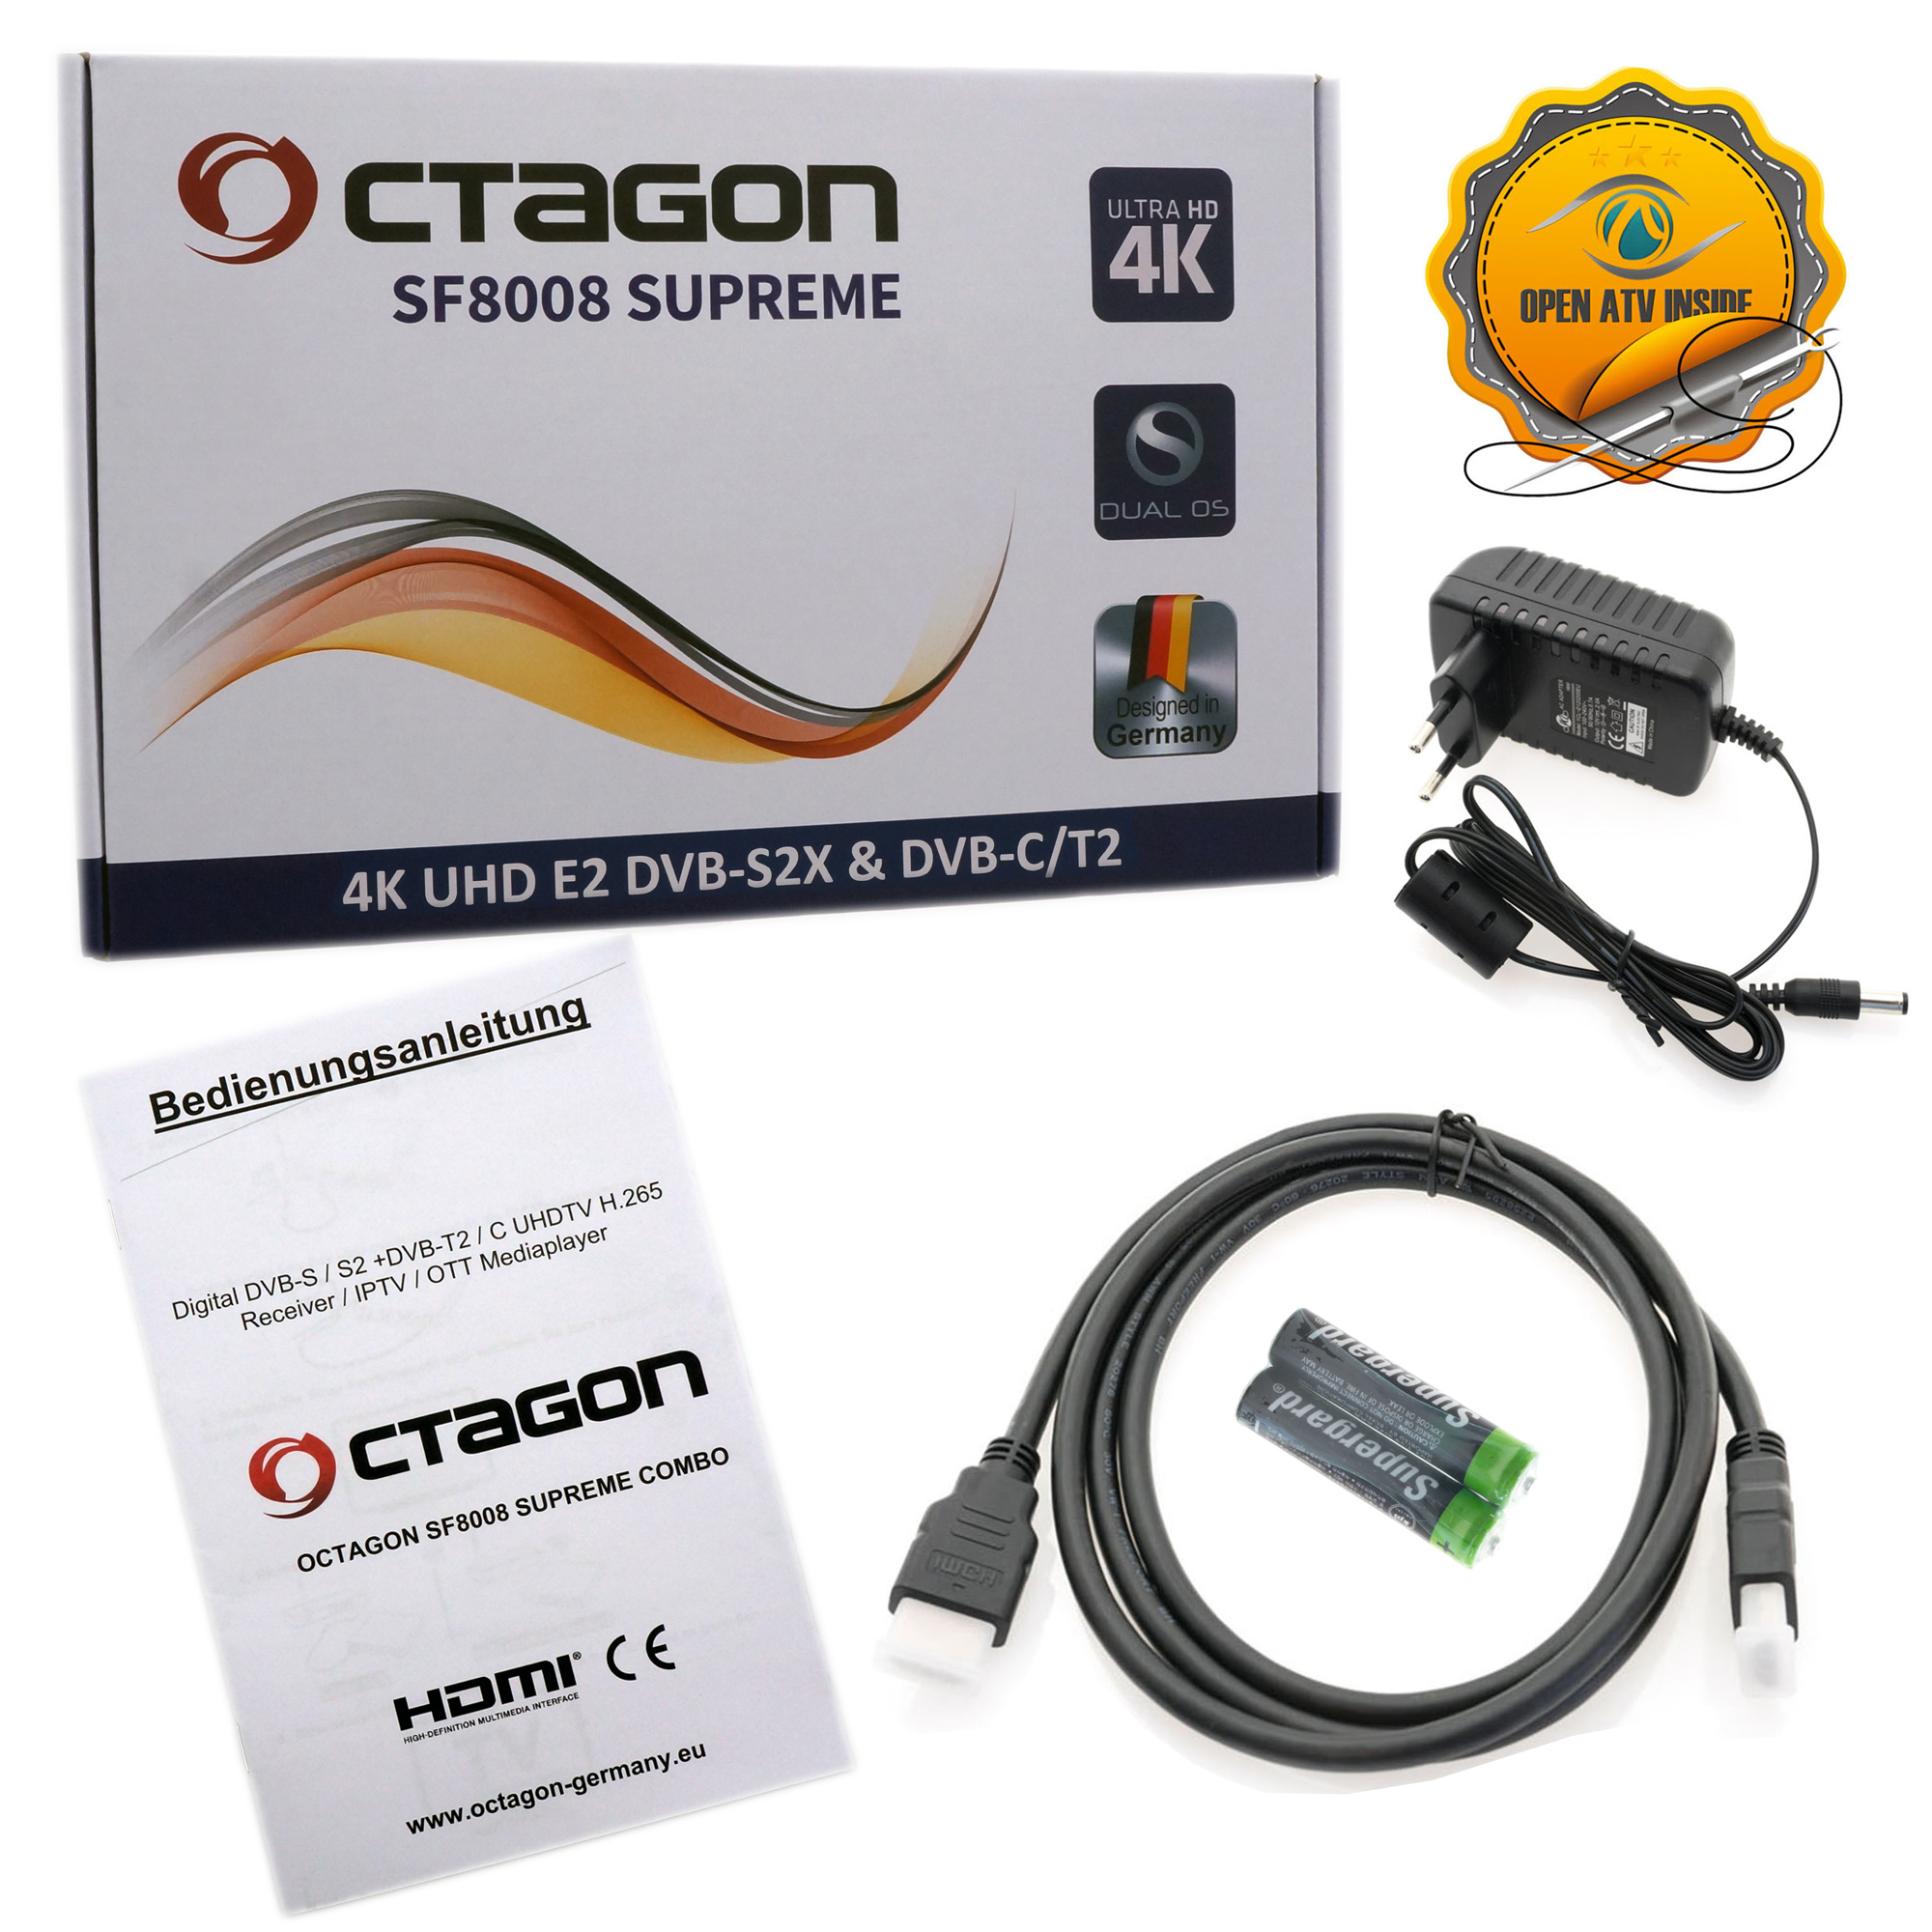 & 4K OCTAGON SUPREME Tuner, UHD 250GB Schwarz) Linux M.2 SF8008 Receiver mit UHD Combo SSD E2 4K (Twin Sat DVB-S2X DVB-C/T2 Receiver